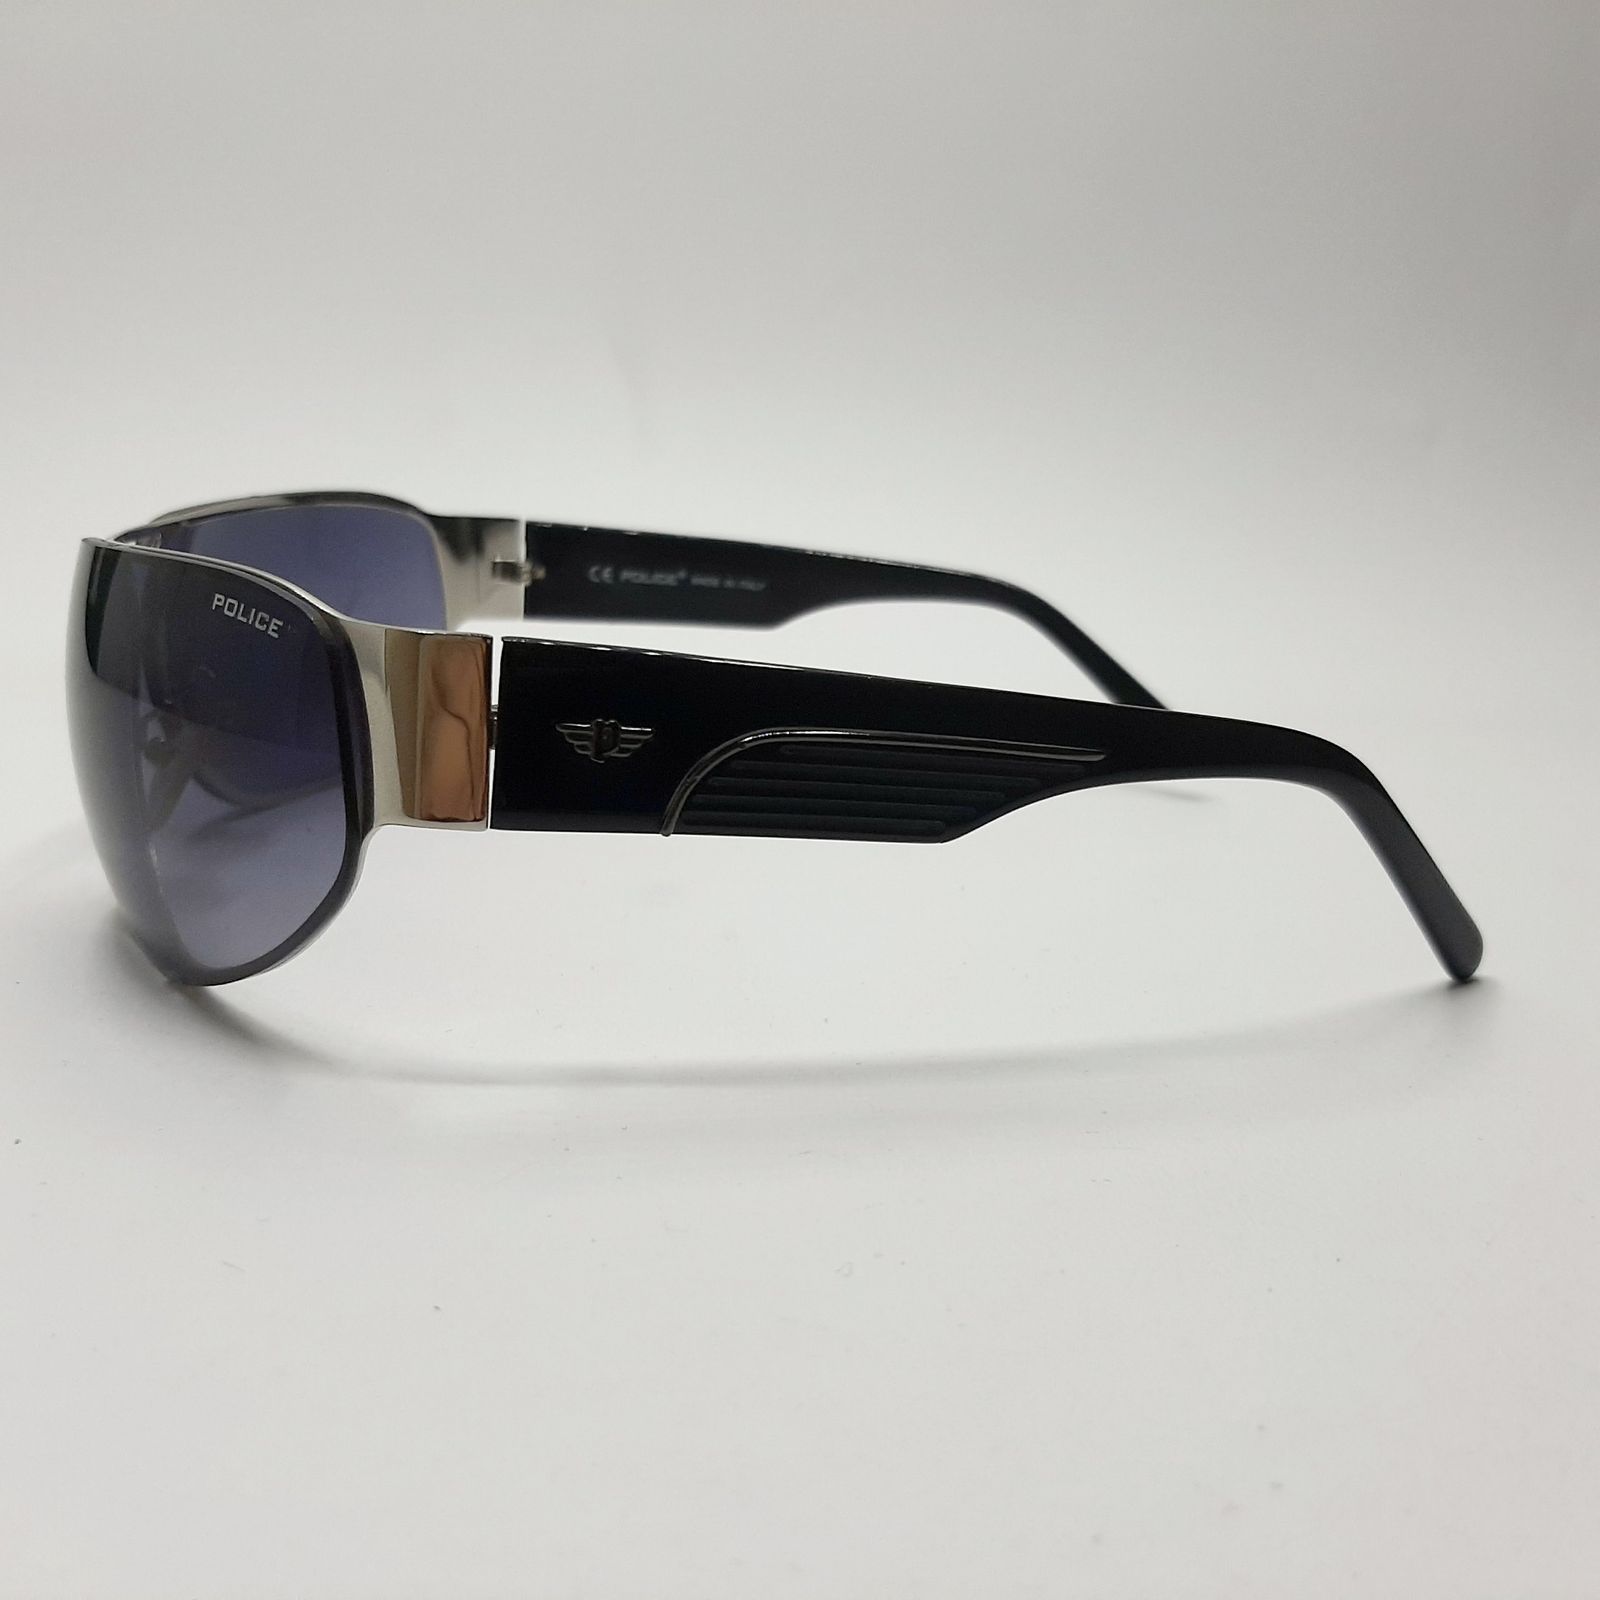 عینک آفتابی پلیس مدل S8569c3 -  - 5